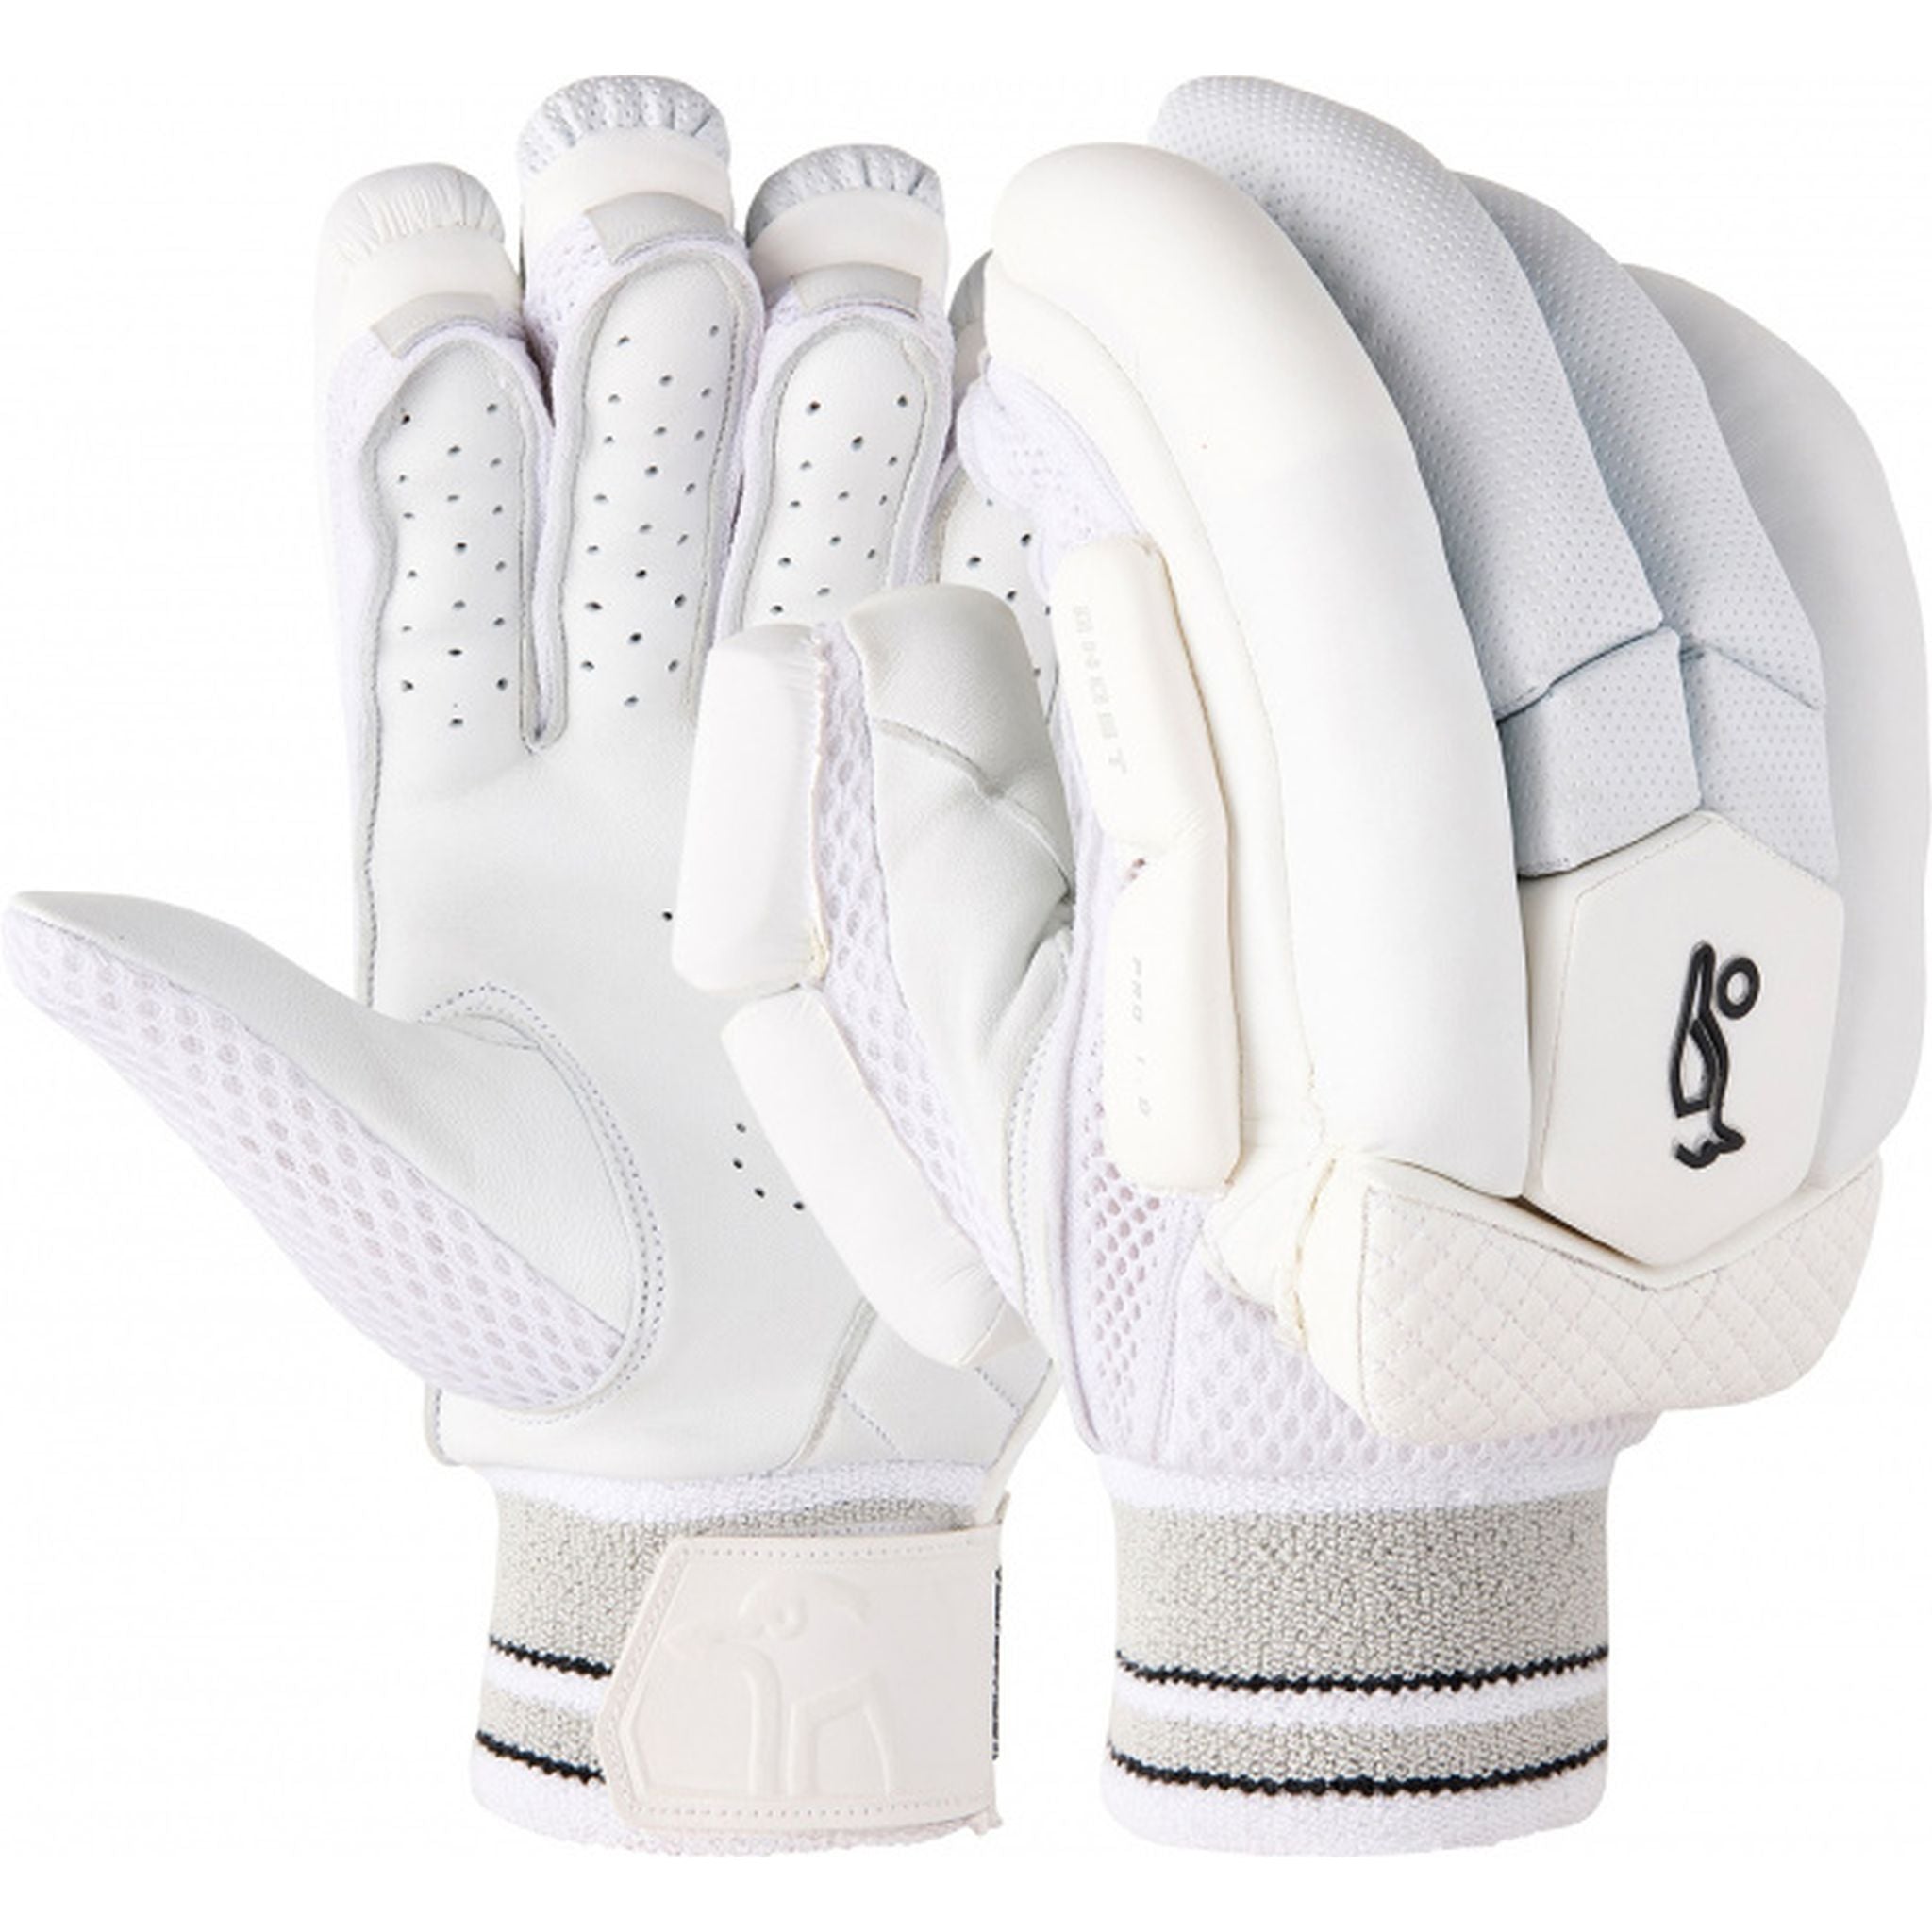 Kookaburra Ghost Pro 1.0 Adults Batting Gloves